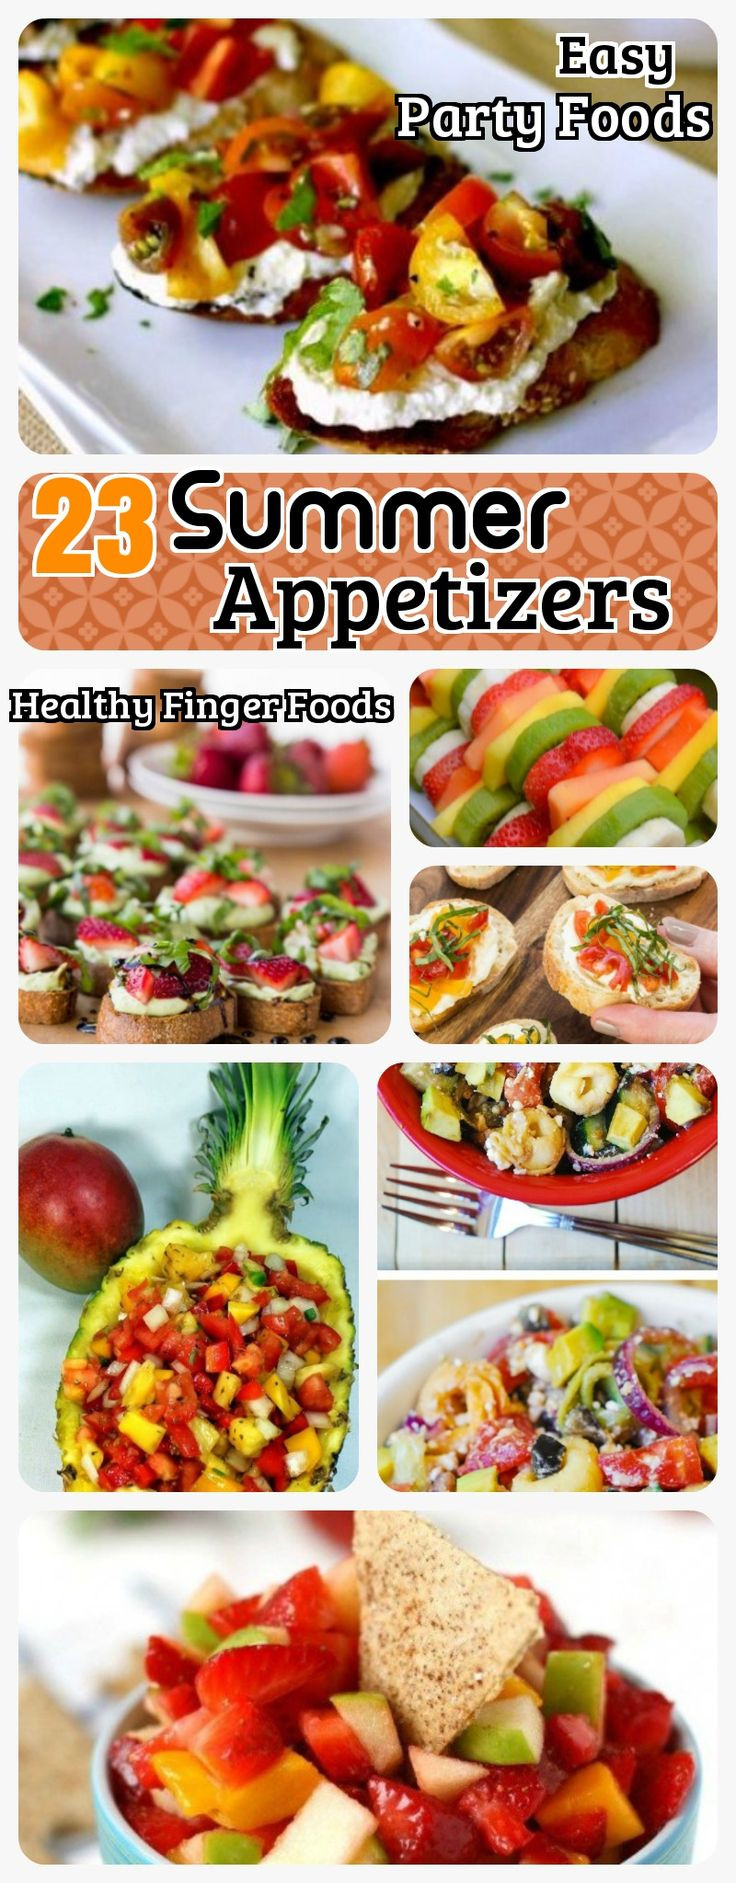 Finger Food Ideas For Summer Party
 Best 25 Finger foods ideas on Pinterest